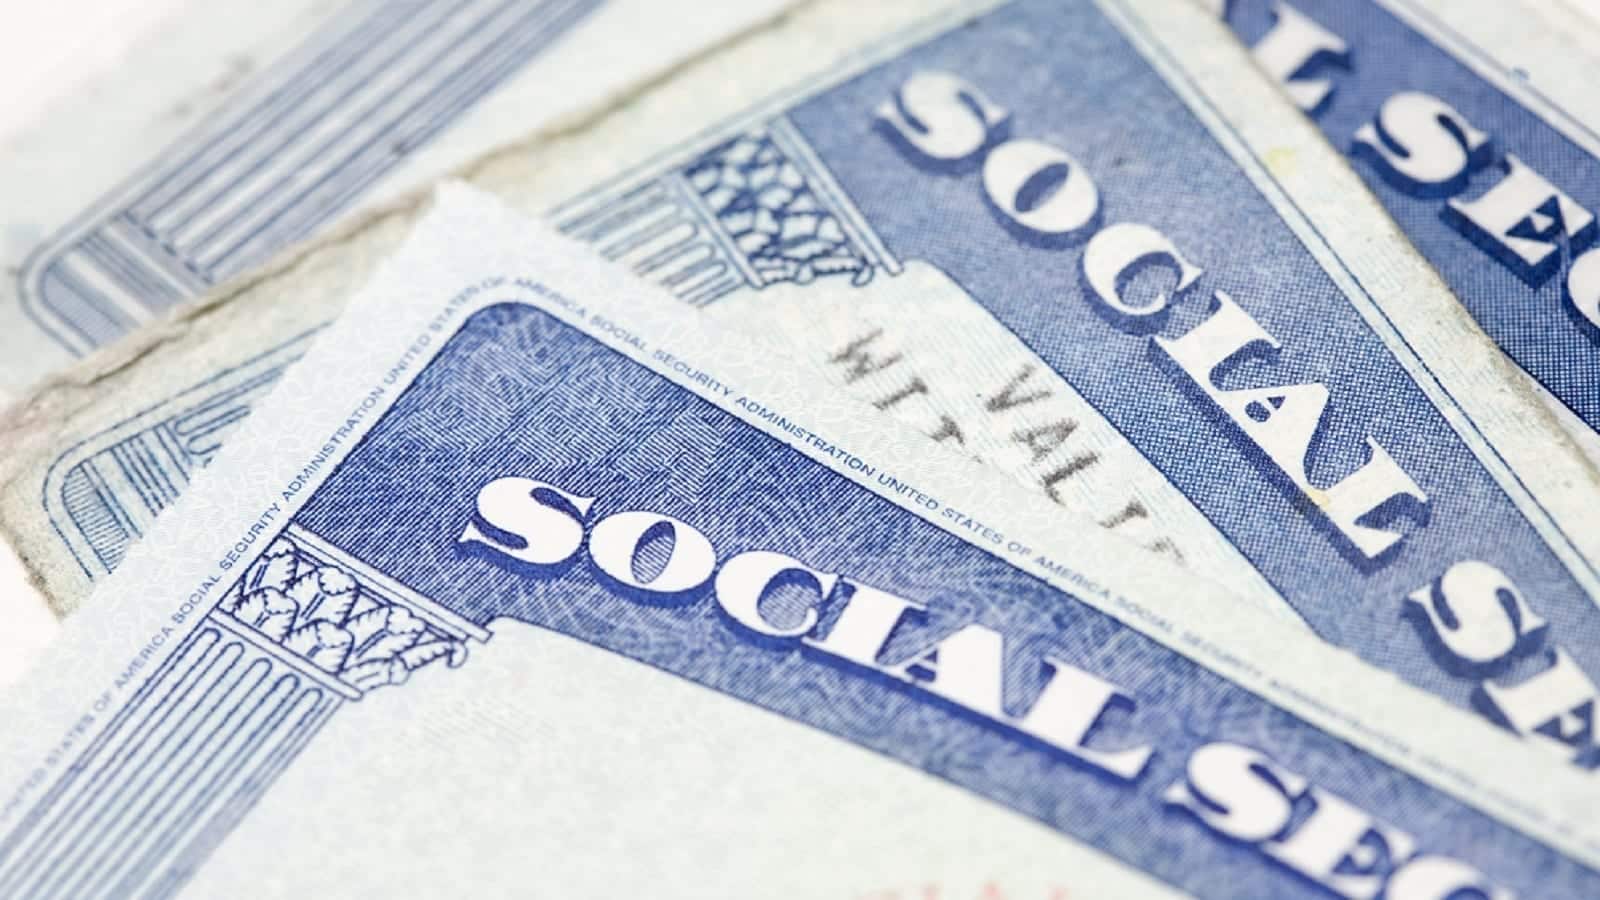 Social Security Cards Stock Photo